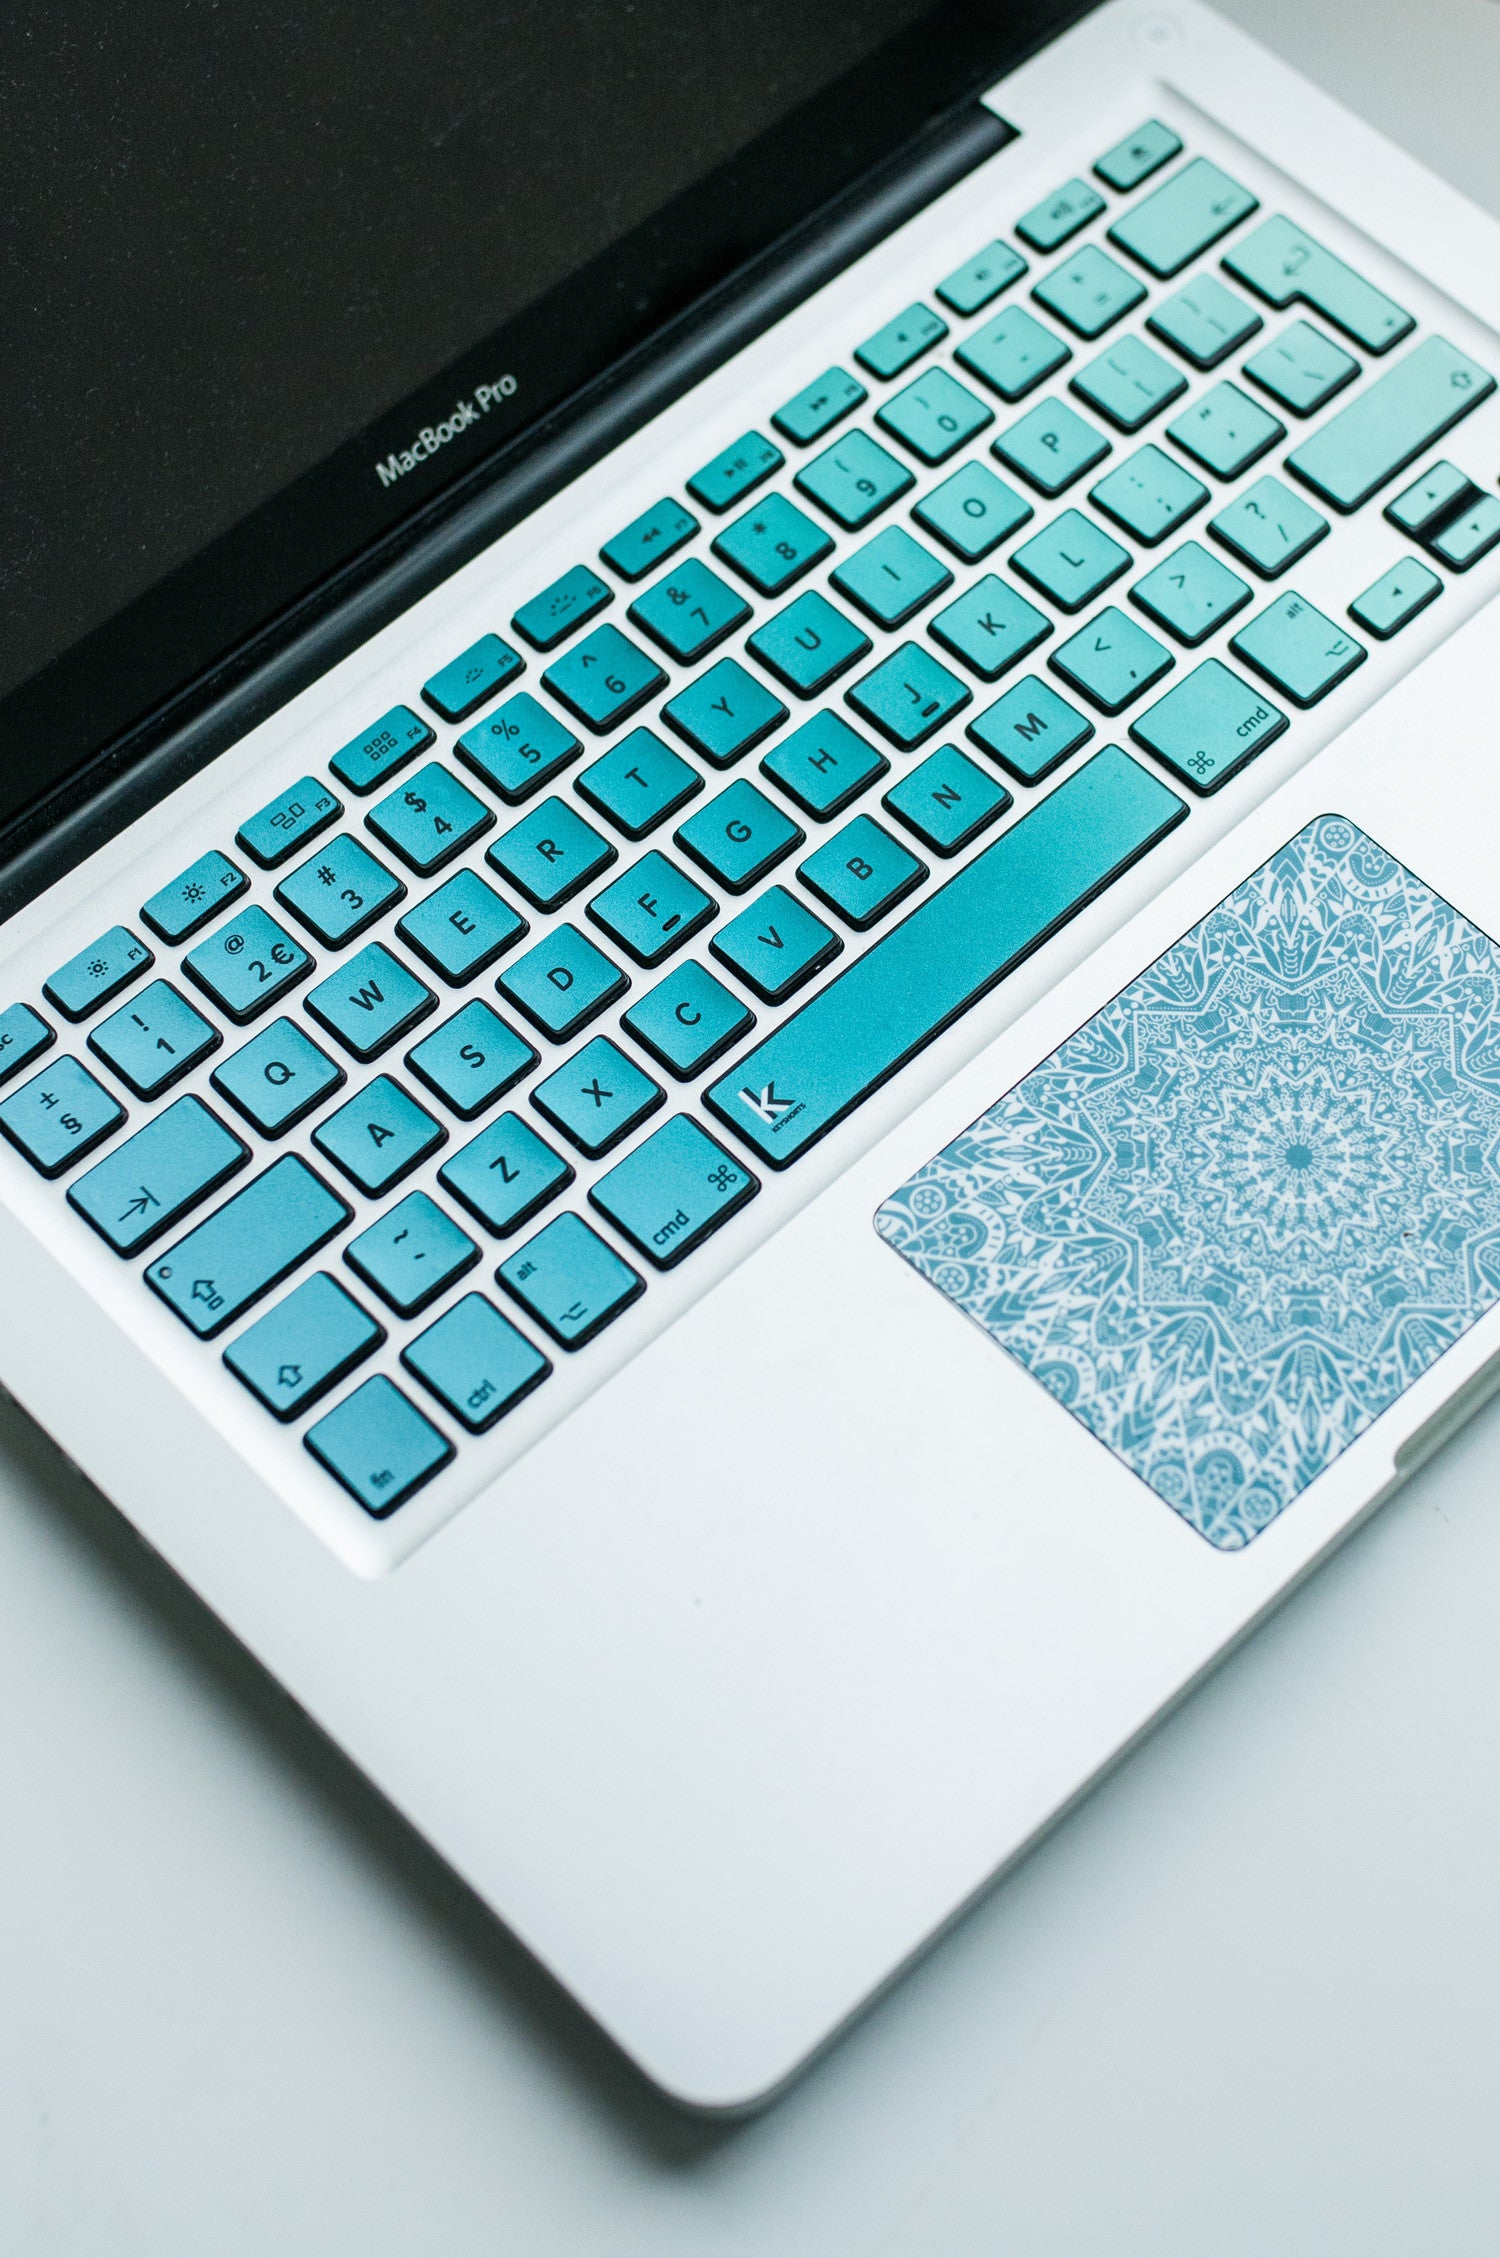 Metallic Blue Green Ombre MacBook Keyboard Stickers decals covers key overlays